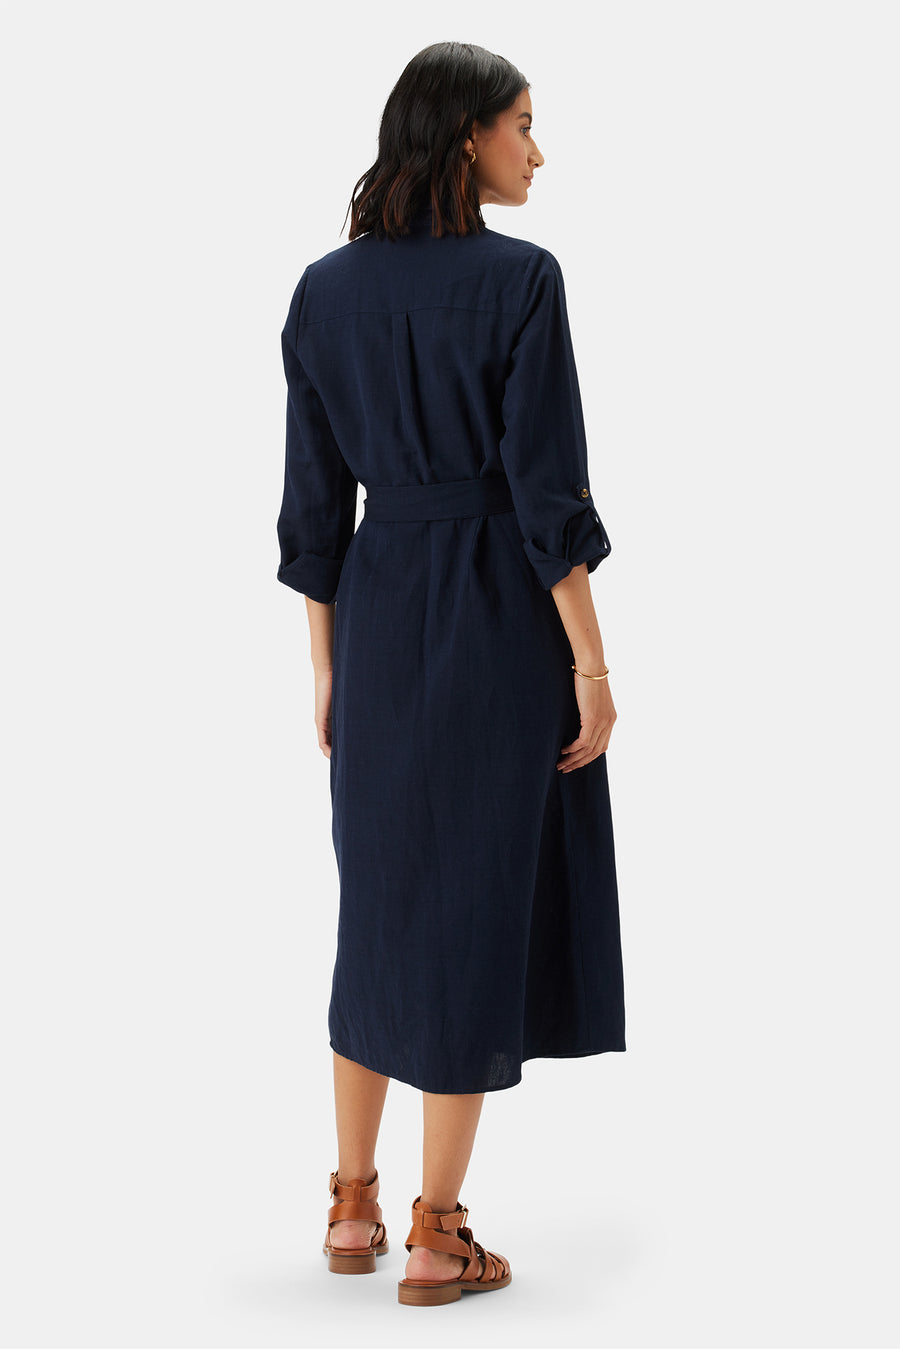 Joyce Cotton Linen Dress - Navy Blue